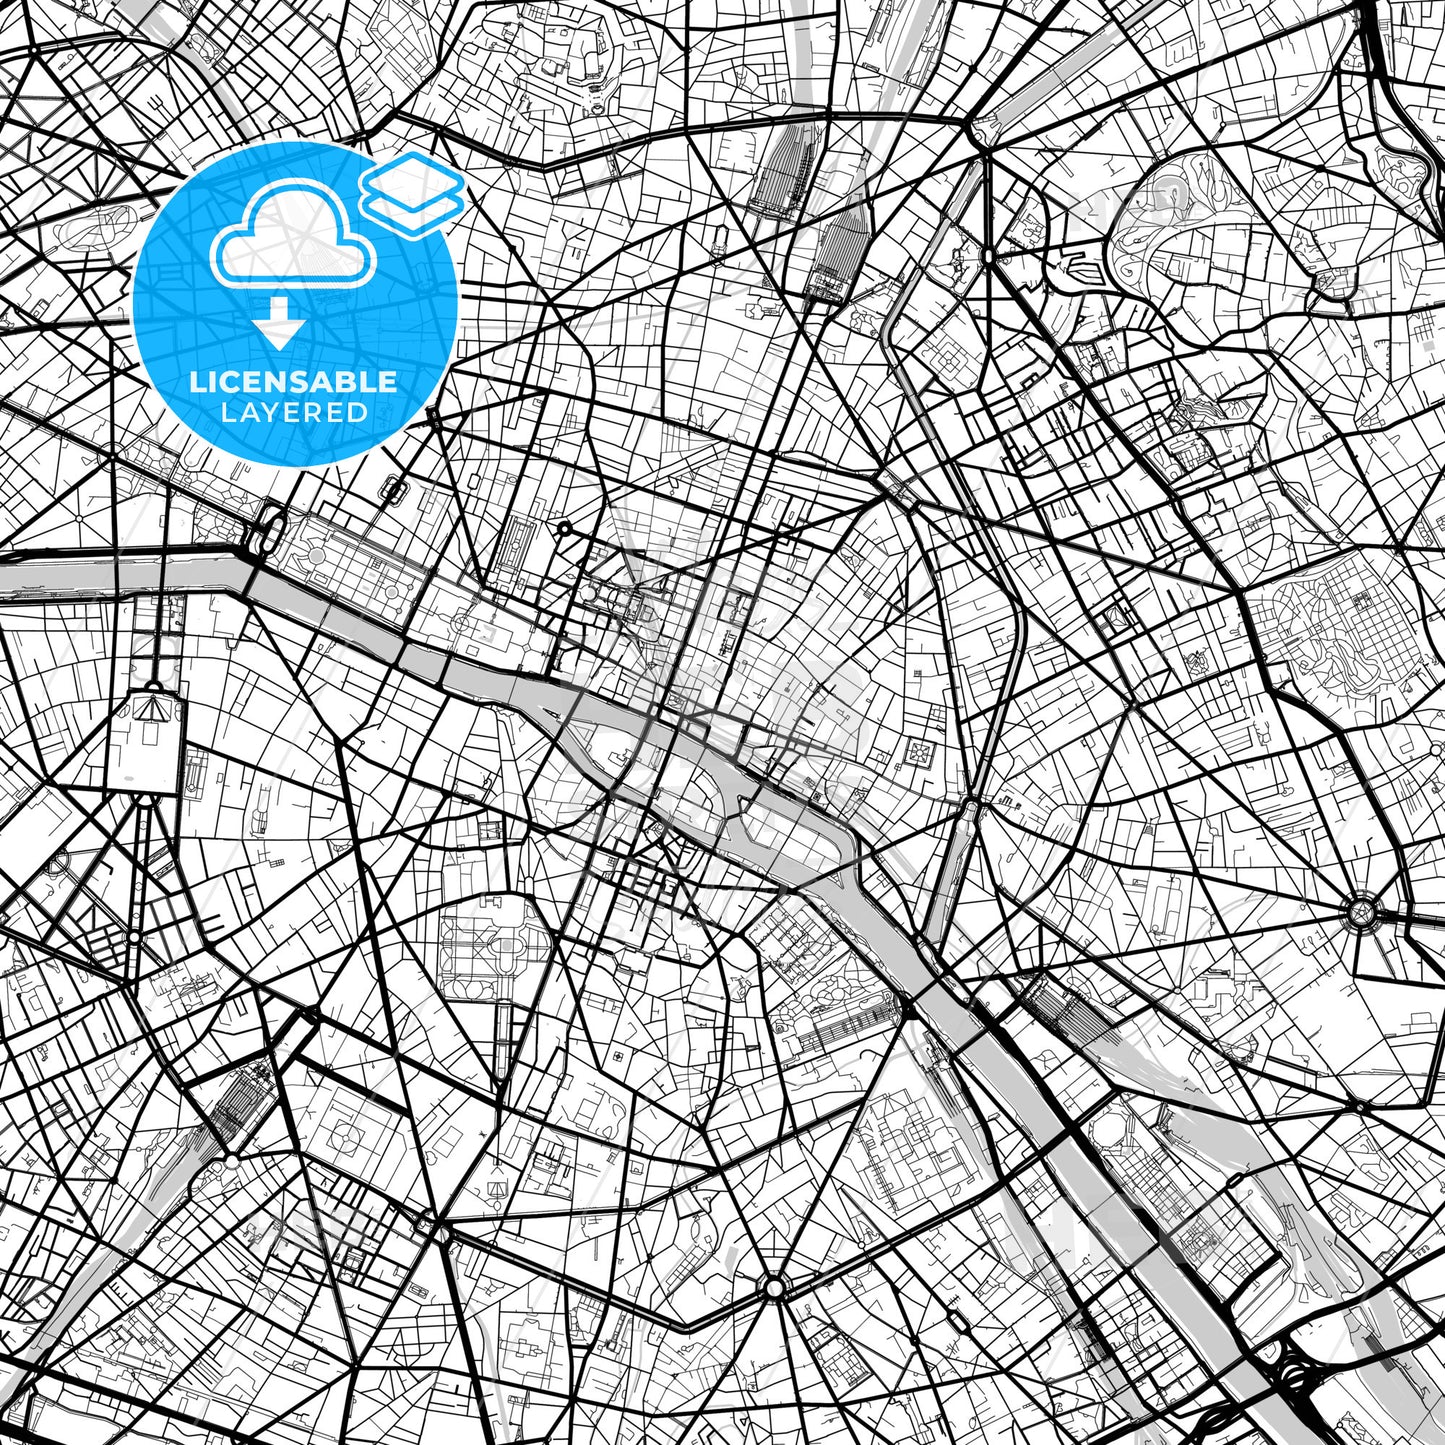 Layered PDF map of Paris, Paris, France